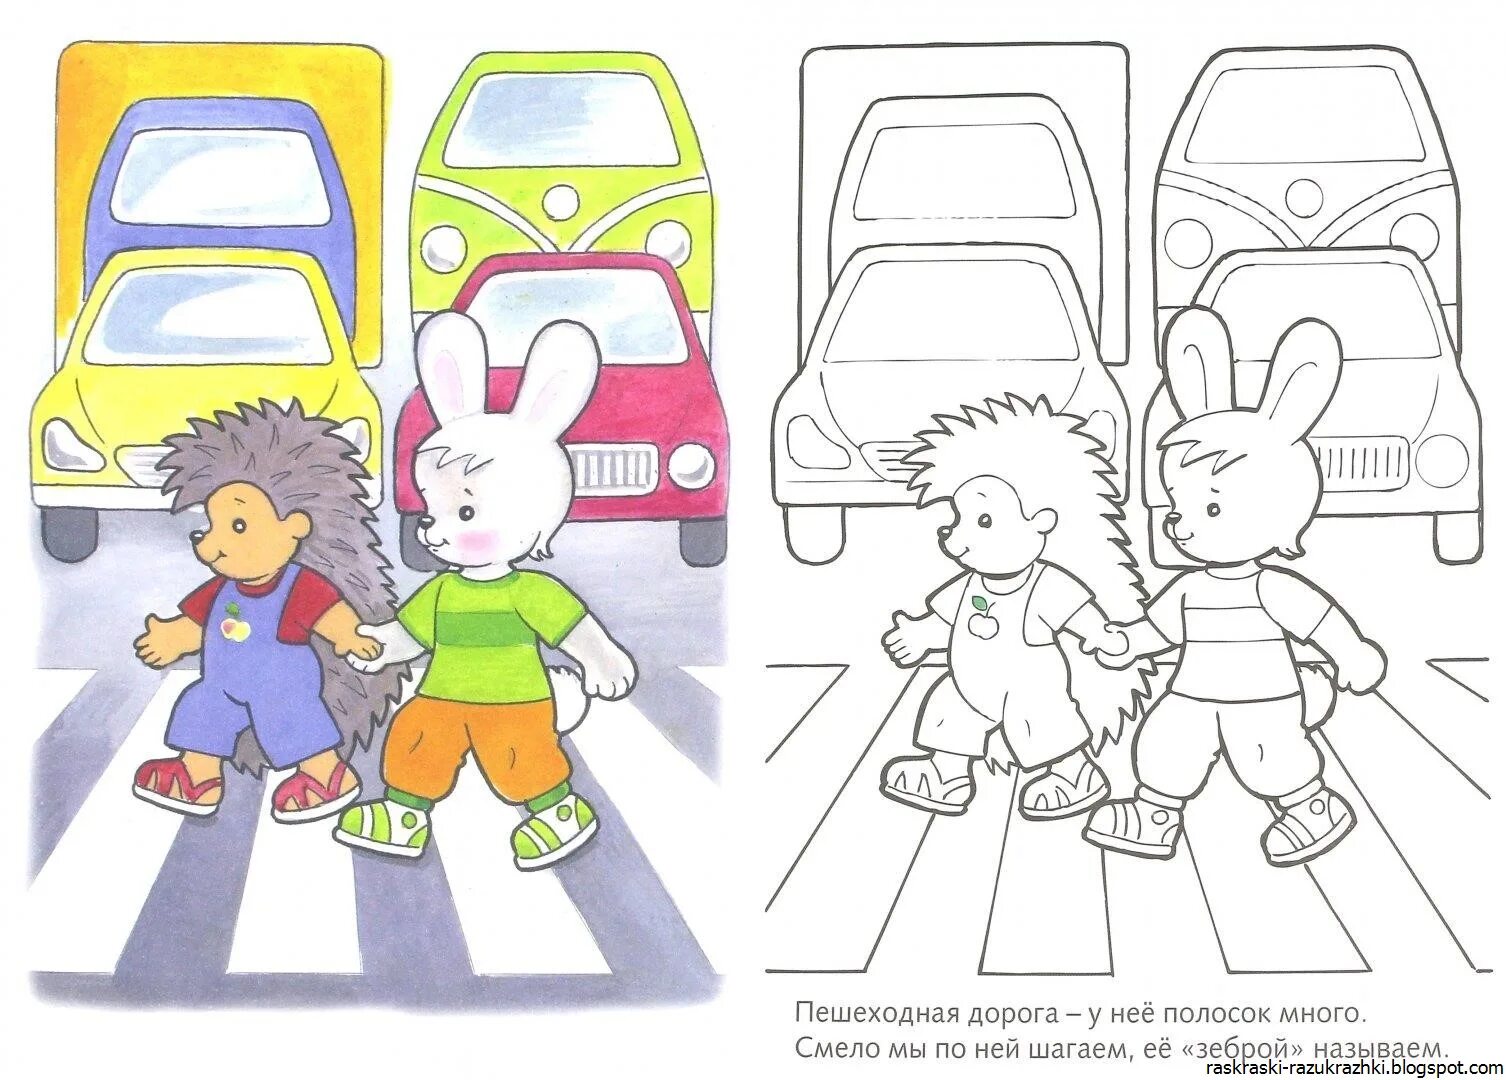 On traffic rules for preschoolers senior group #8